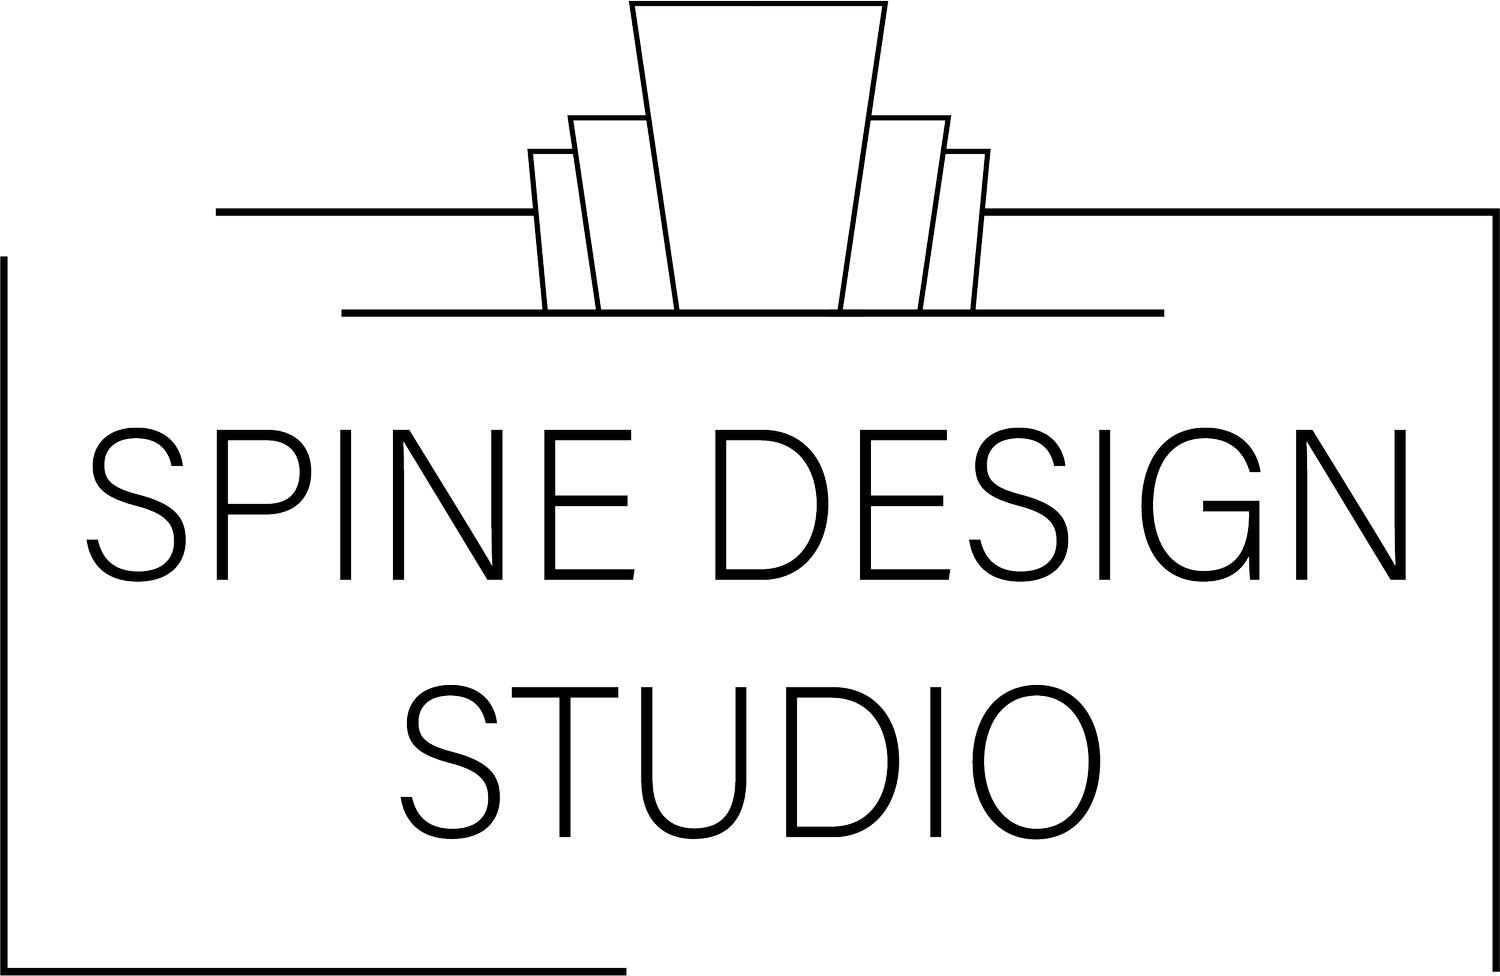 Spine design studio